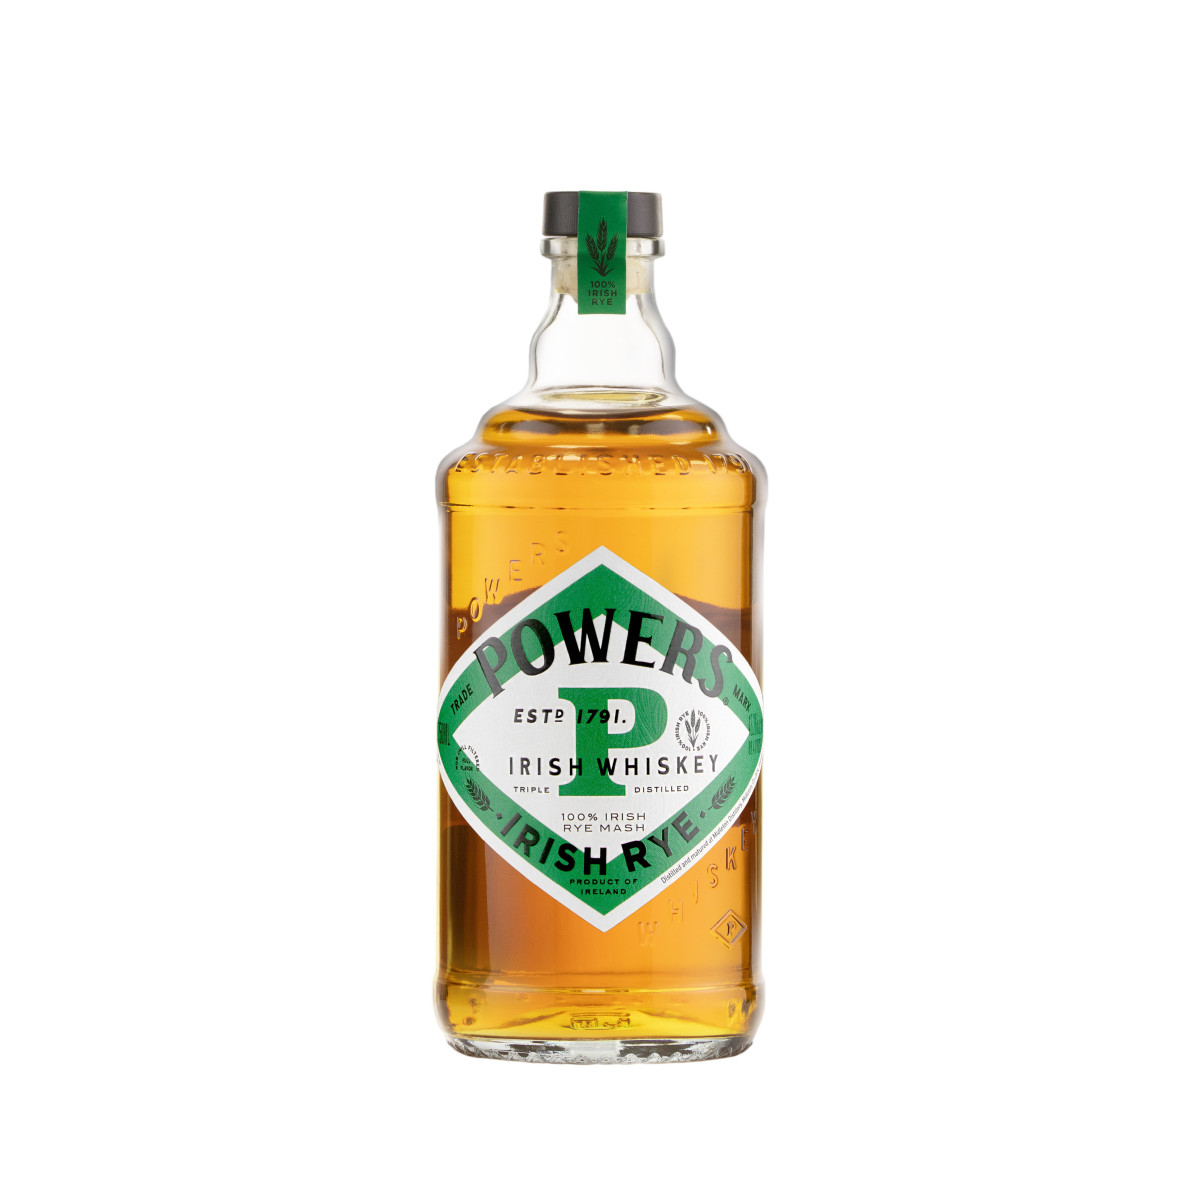 A bottle of Powers Irish Rye